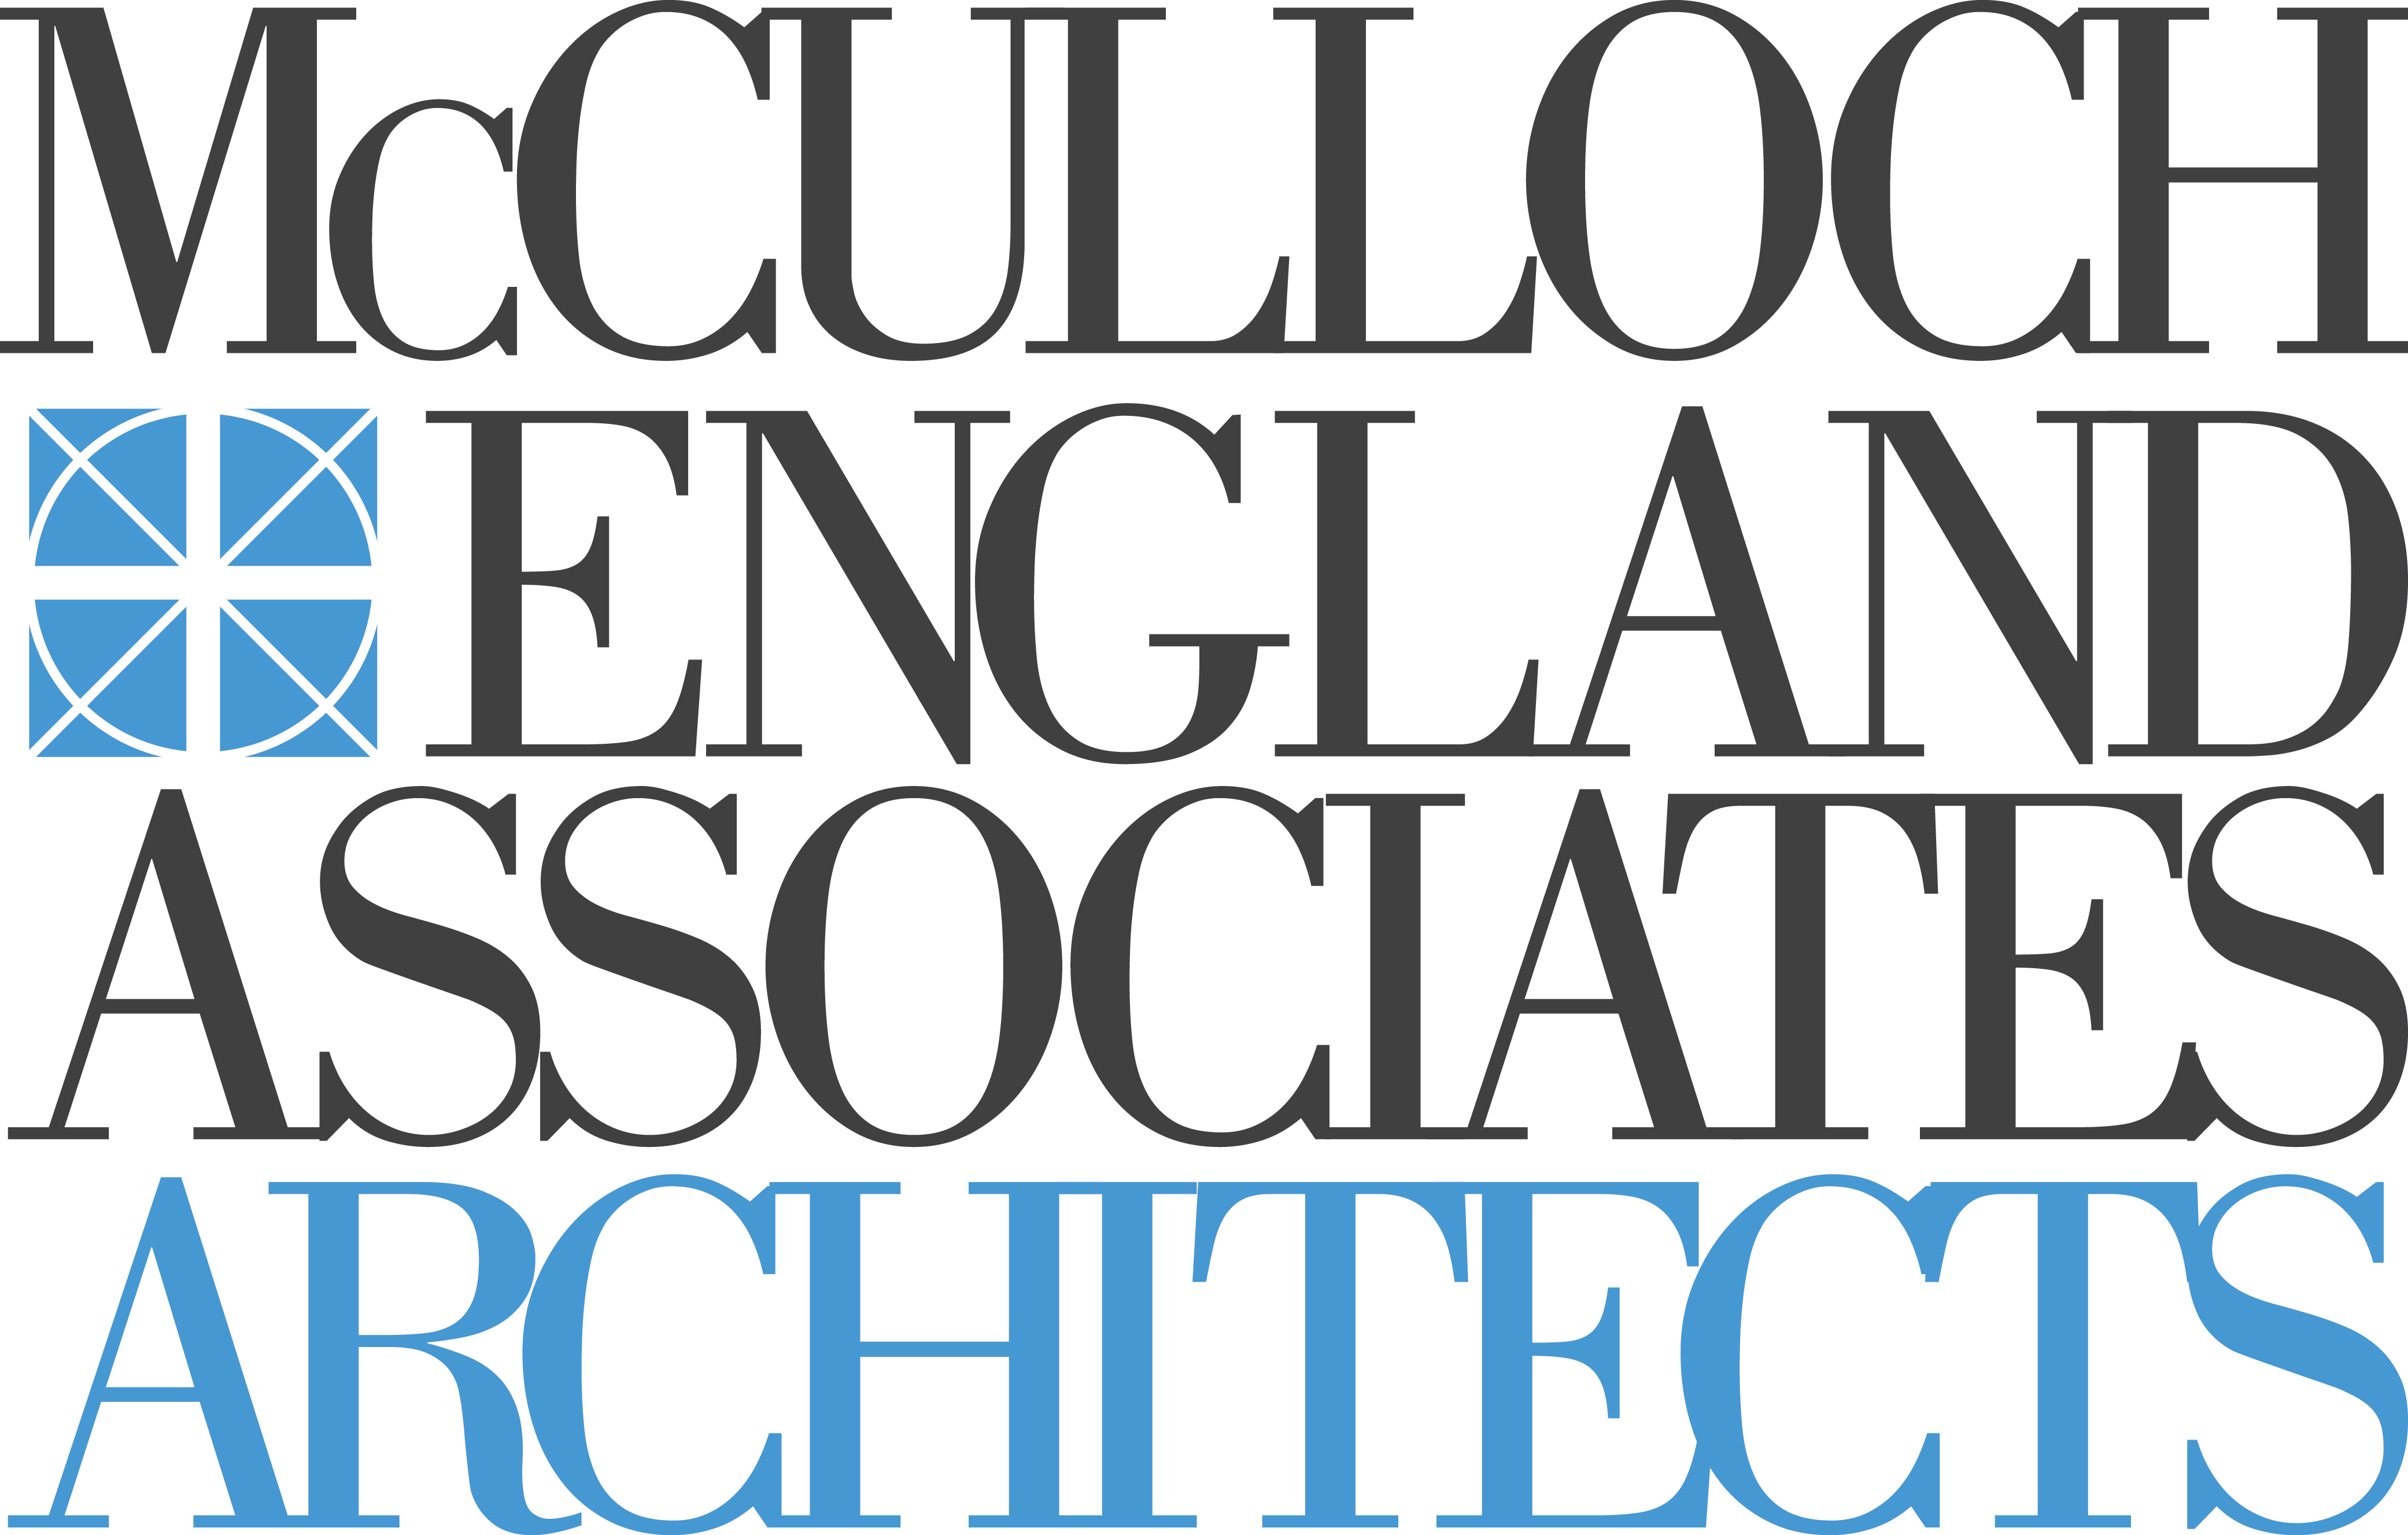 McCulloch England Associates Architects